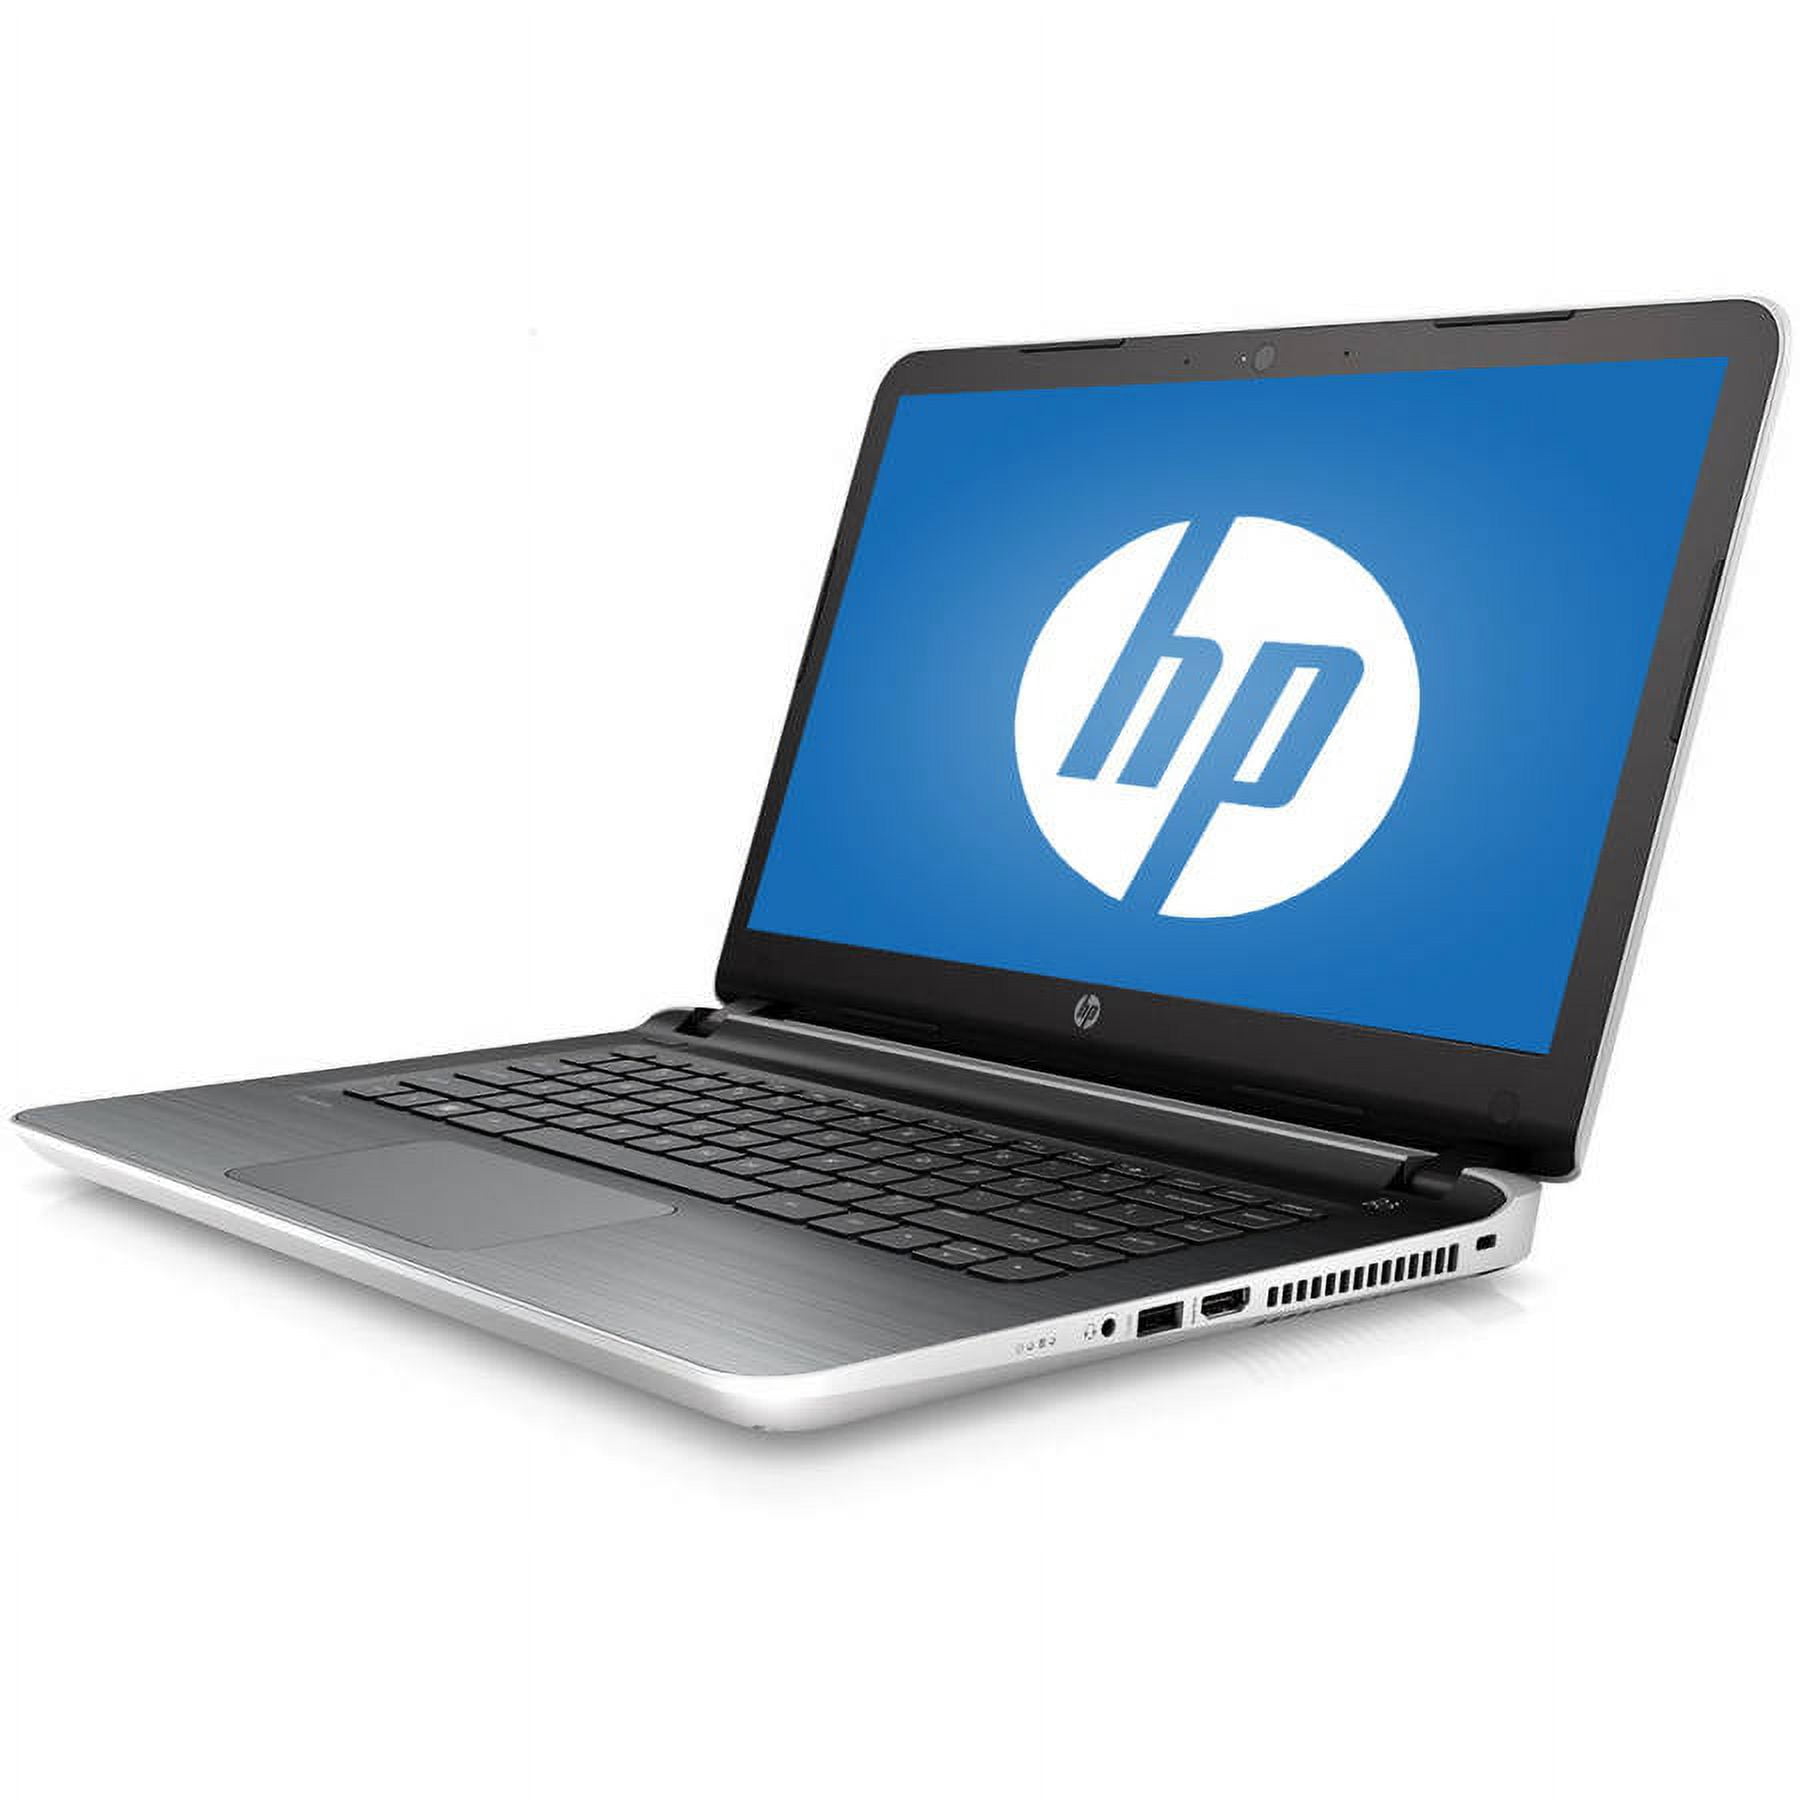 Restored HP Pavilion 17-g131cy 17.3 Laptop, Windows 10 Home, AMD A6-6310  Processor, 6GB RAM, 1TB Hard Drive (Refurbished) 